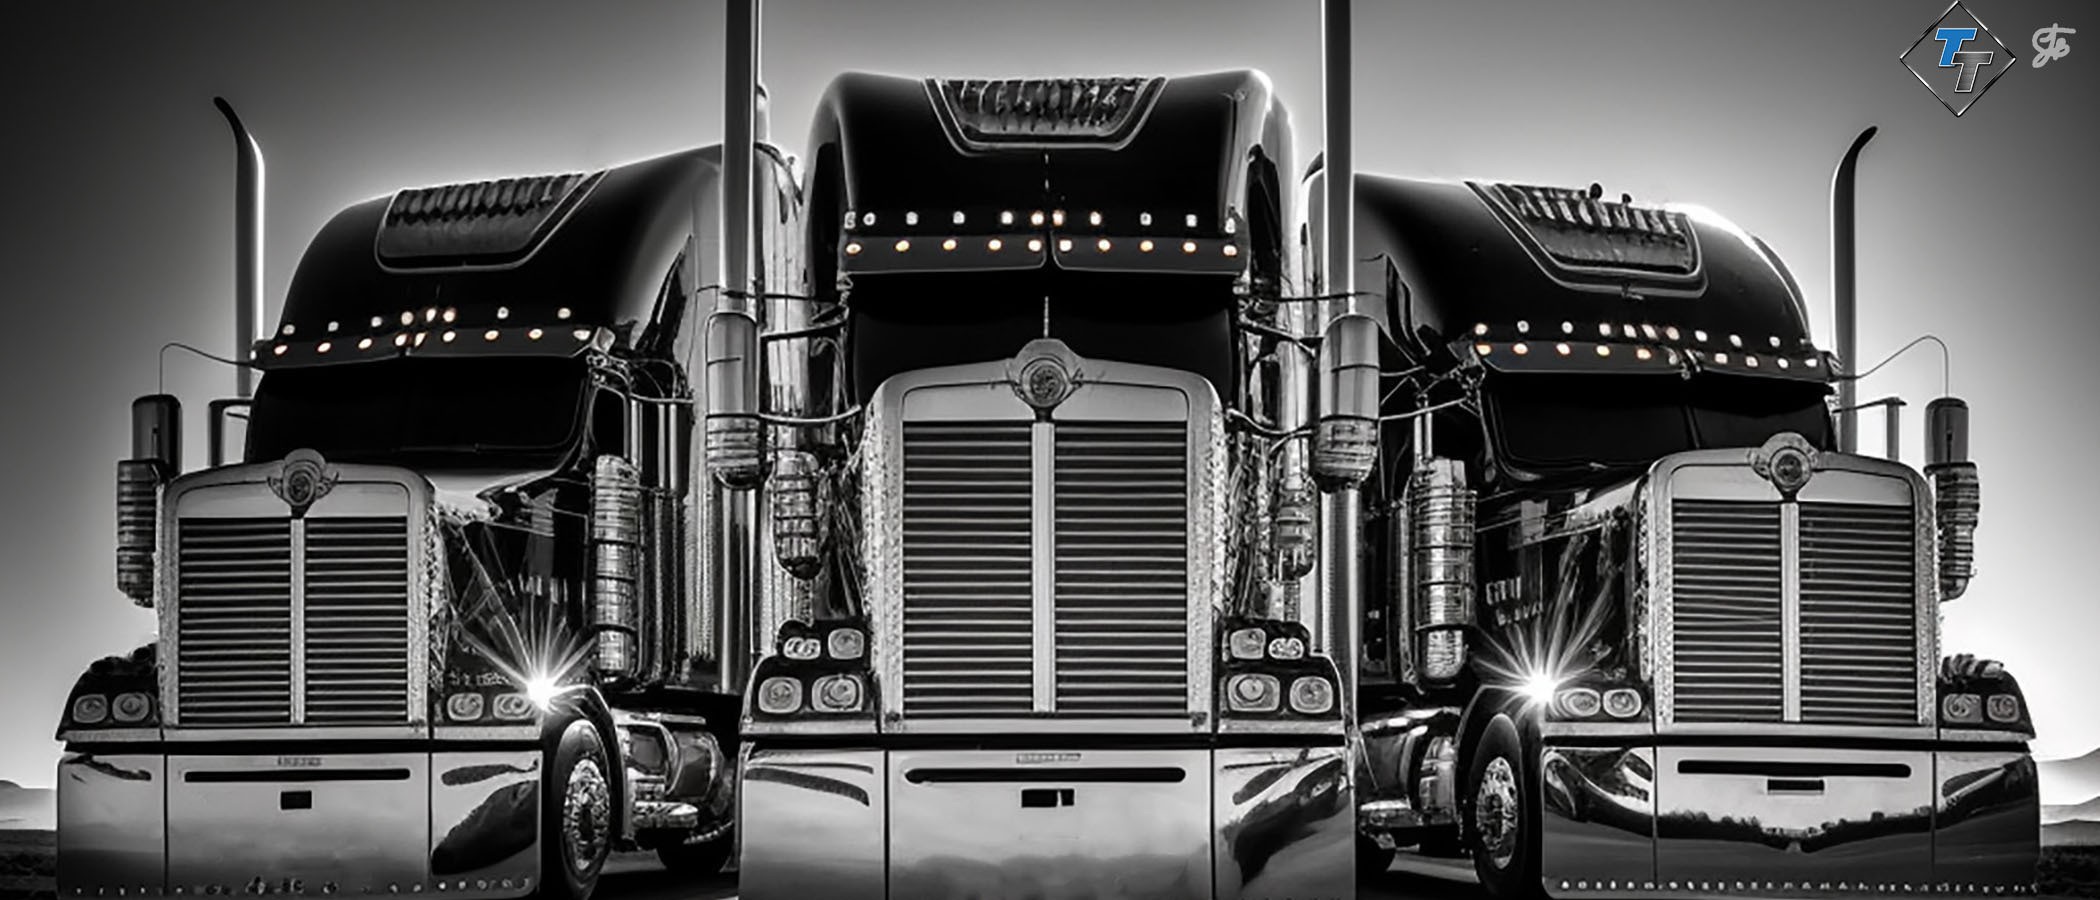 21 Trucker Gear ideas  trucker, truck driver, trucks